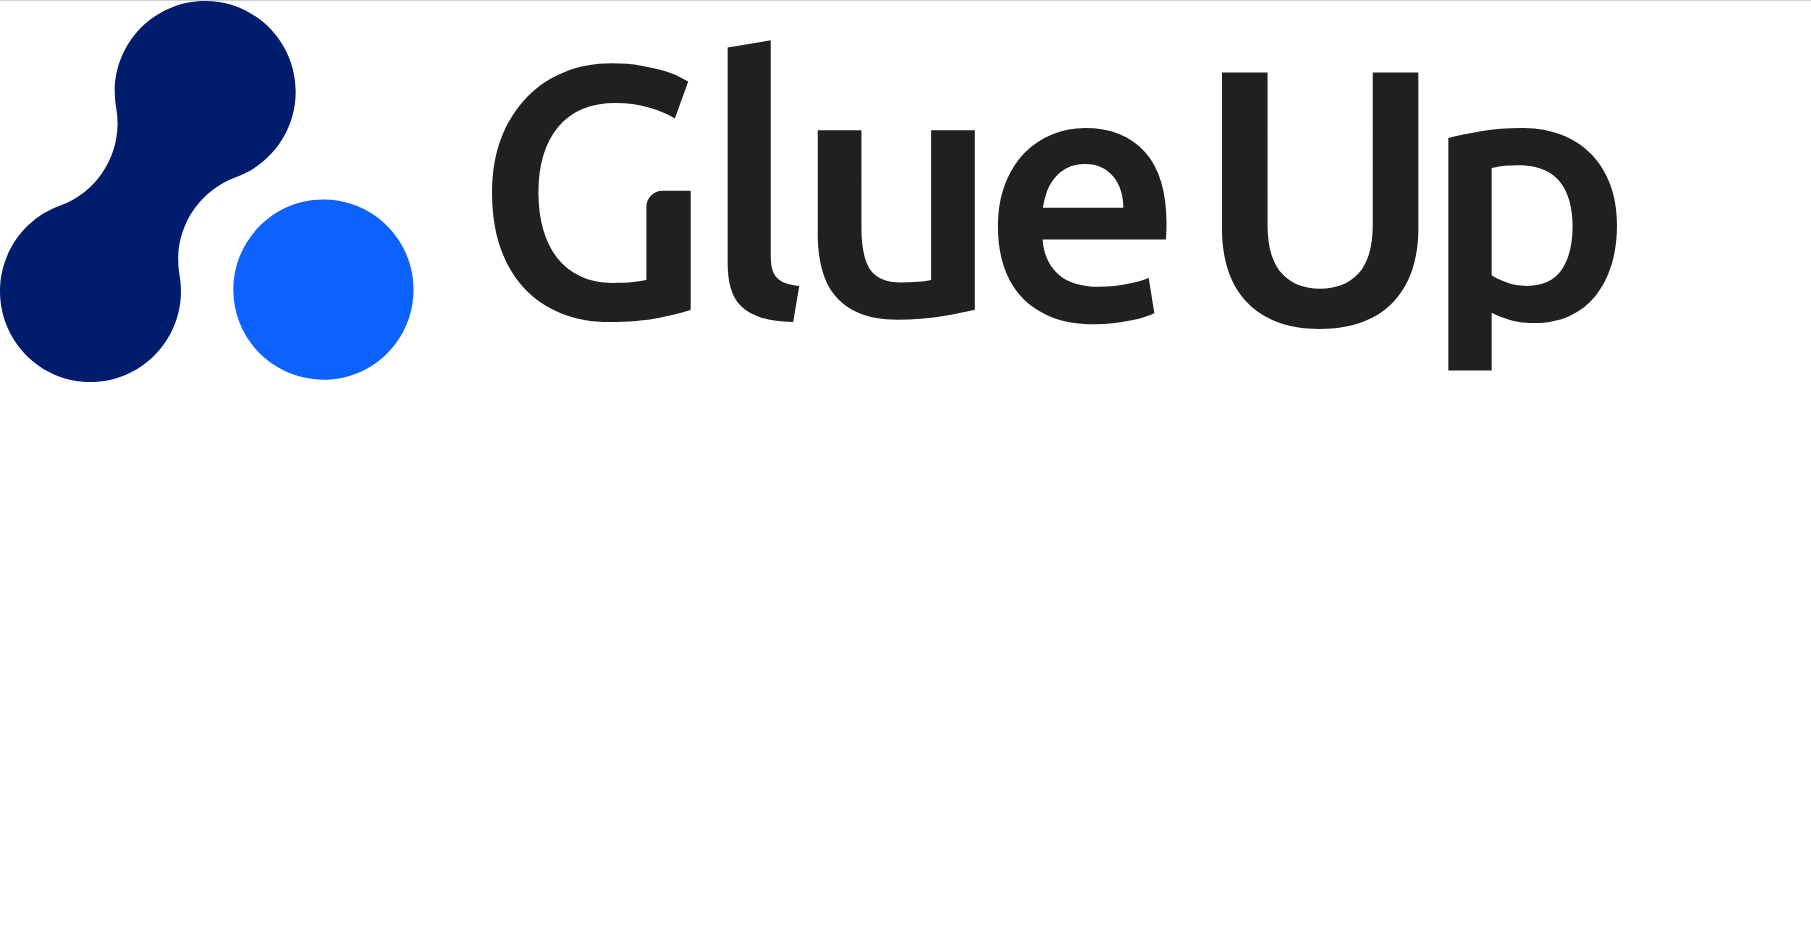 Glue Up